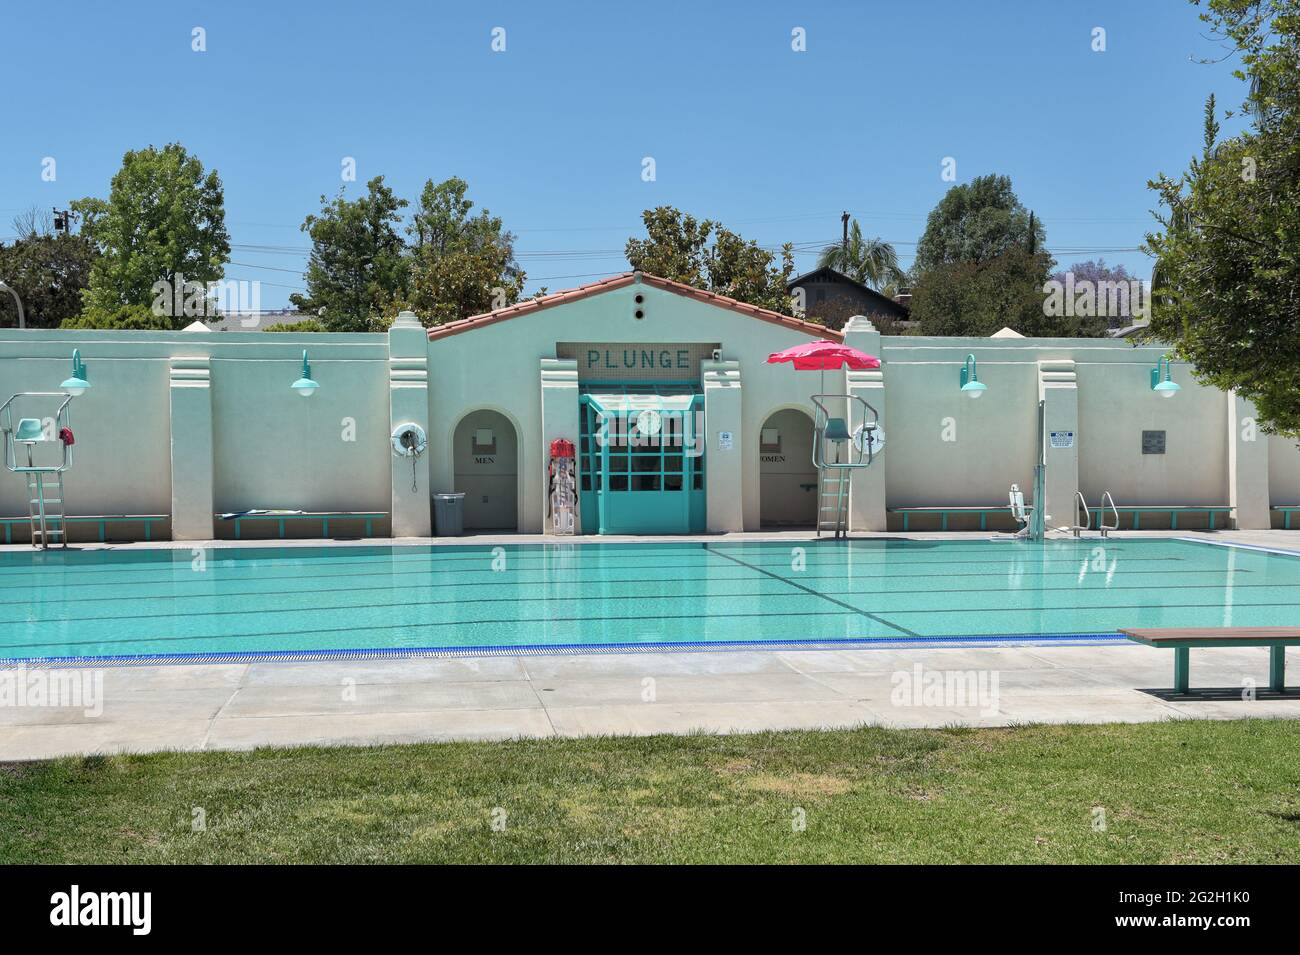 BREA, CALIFORNIA - 9 JUN 2021: The Plunge, a public swimming pool in City Hall Park. Stock Photo